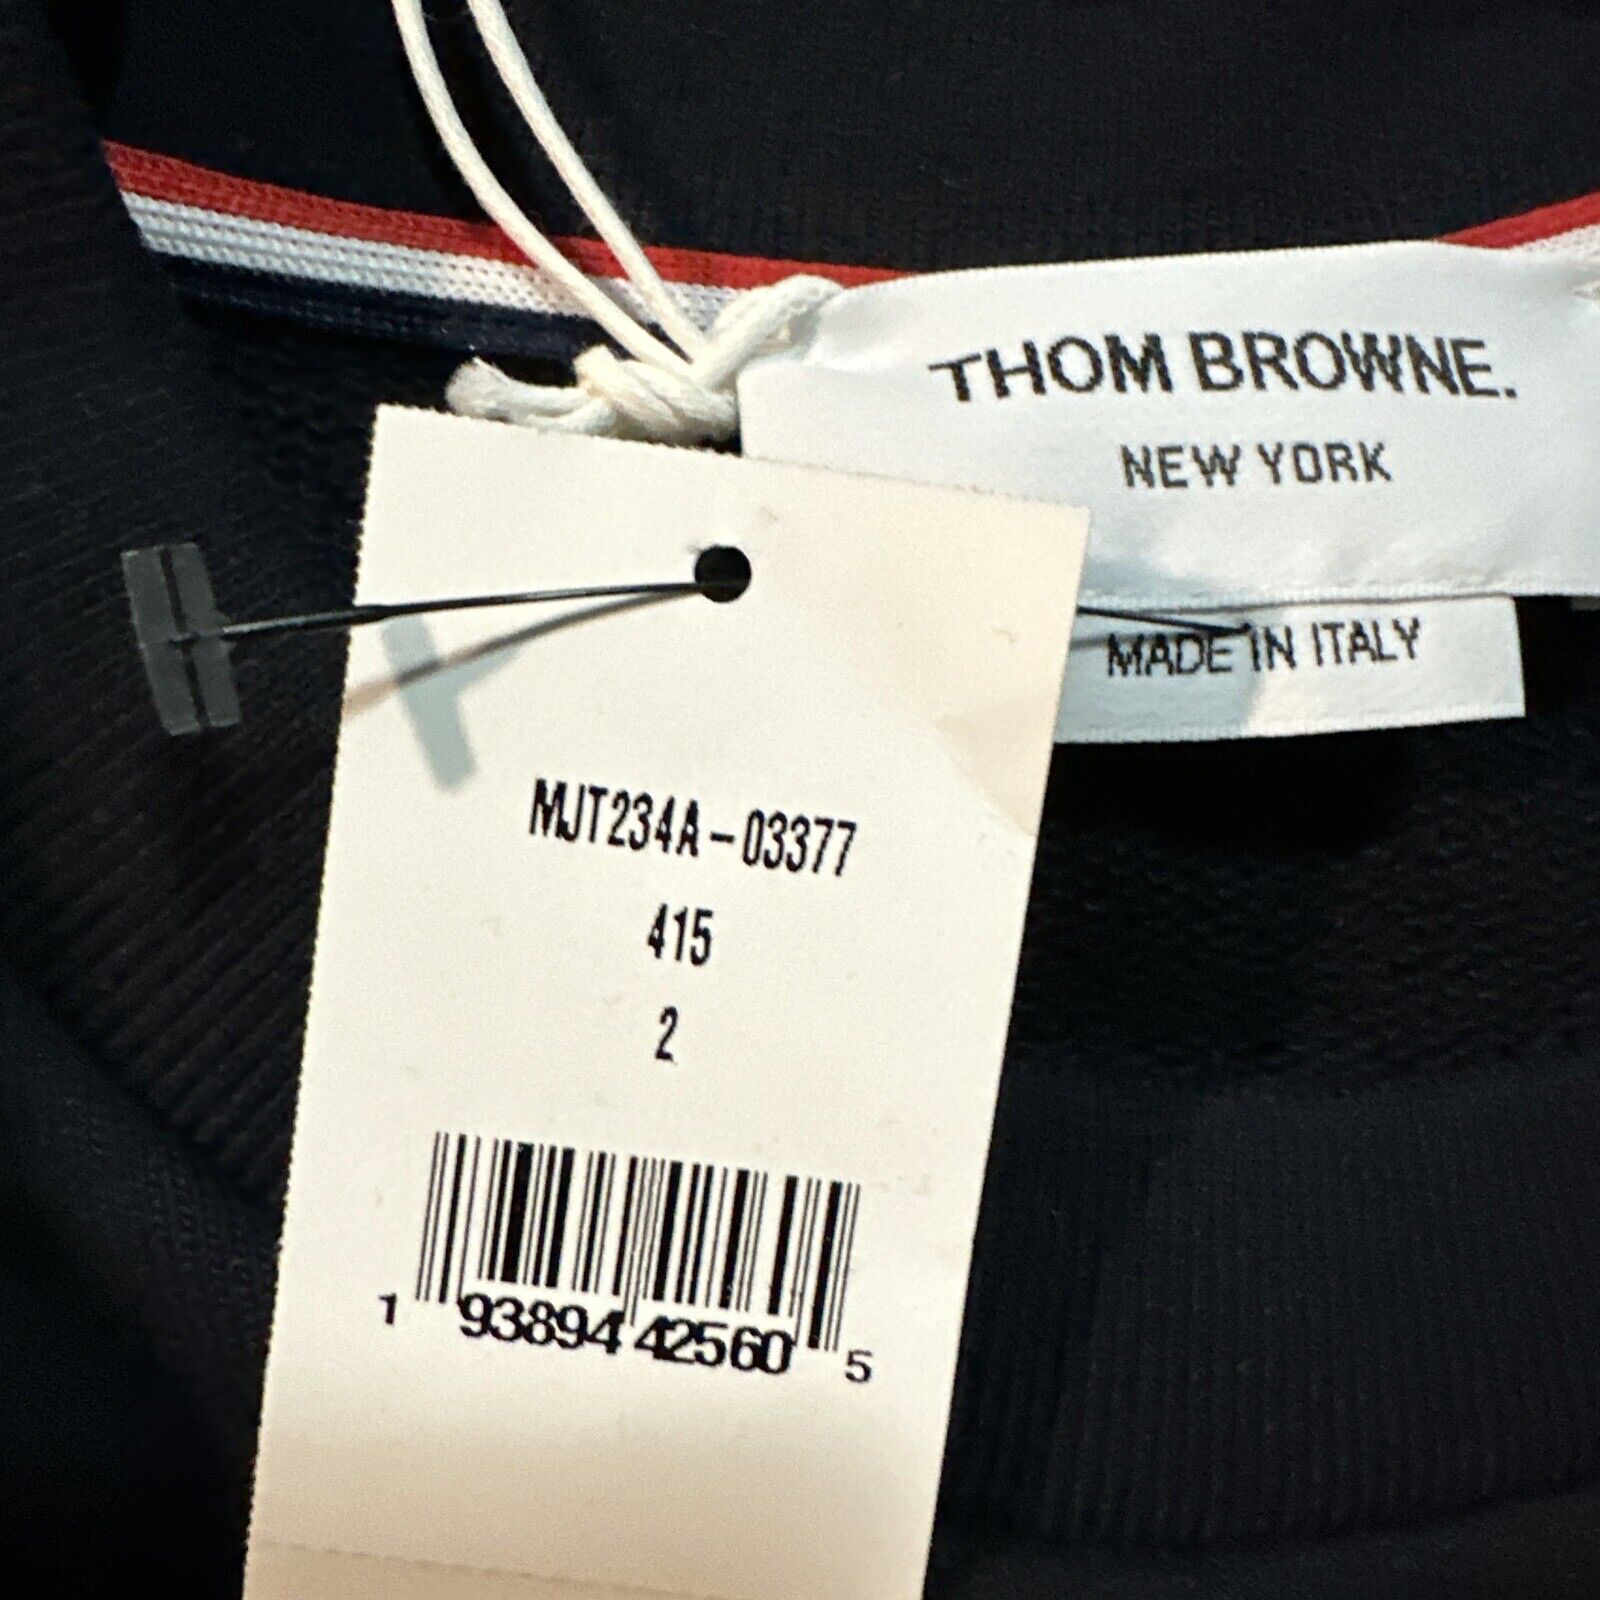 NWT Thom Browne Men’s Crewneck Sweatshirt Pullover Navy M ( 2 ) Italy